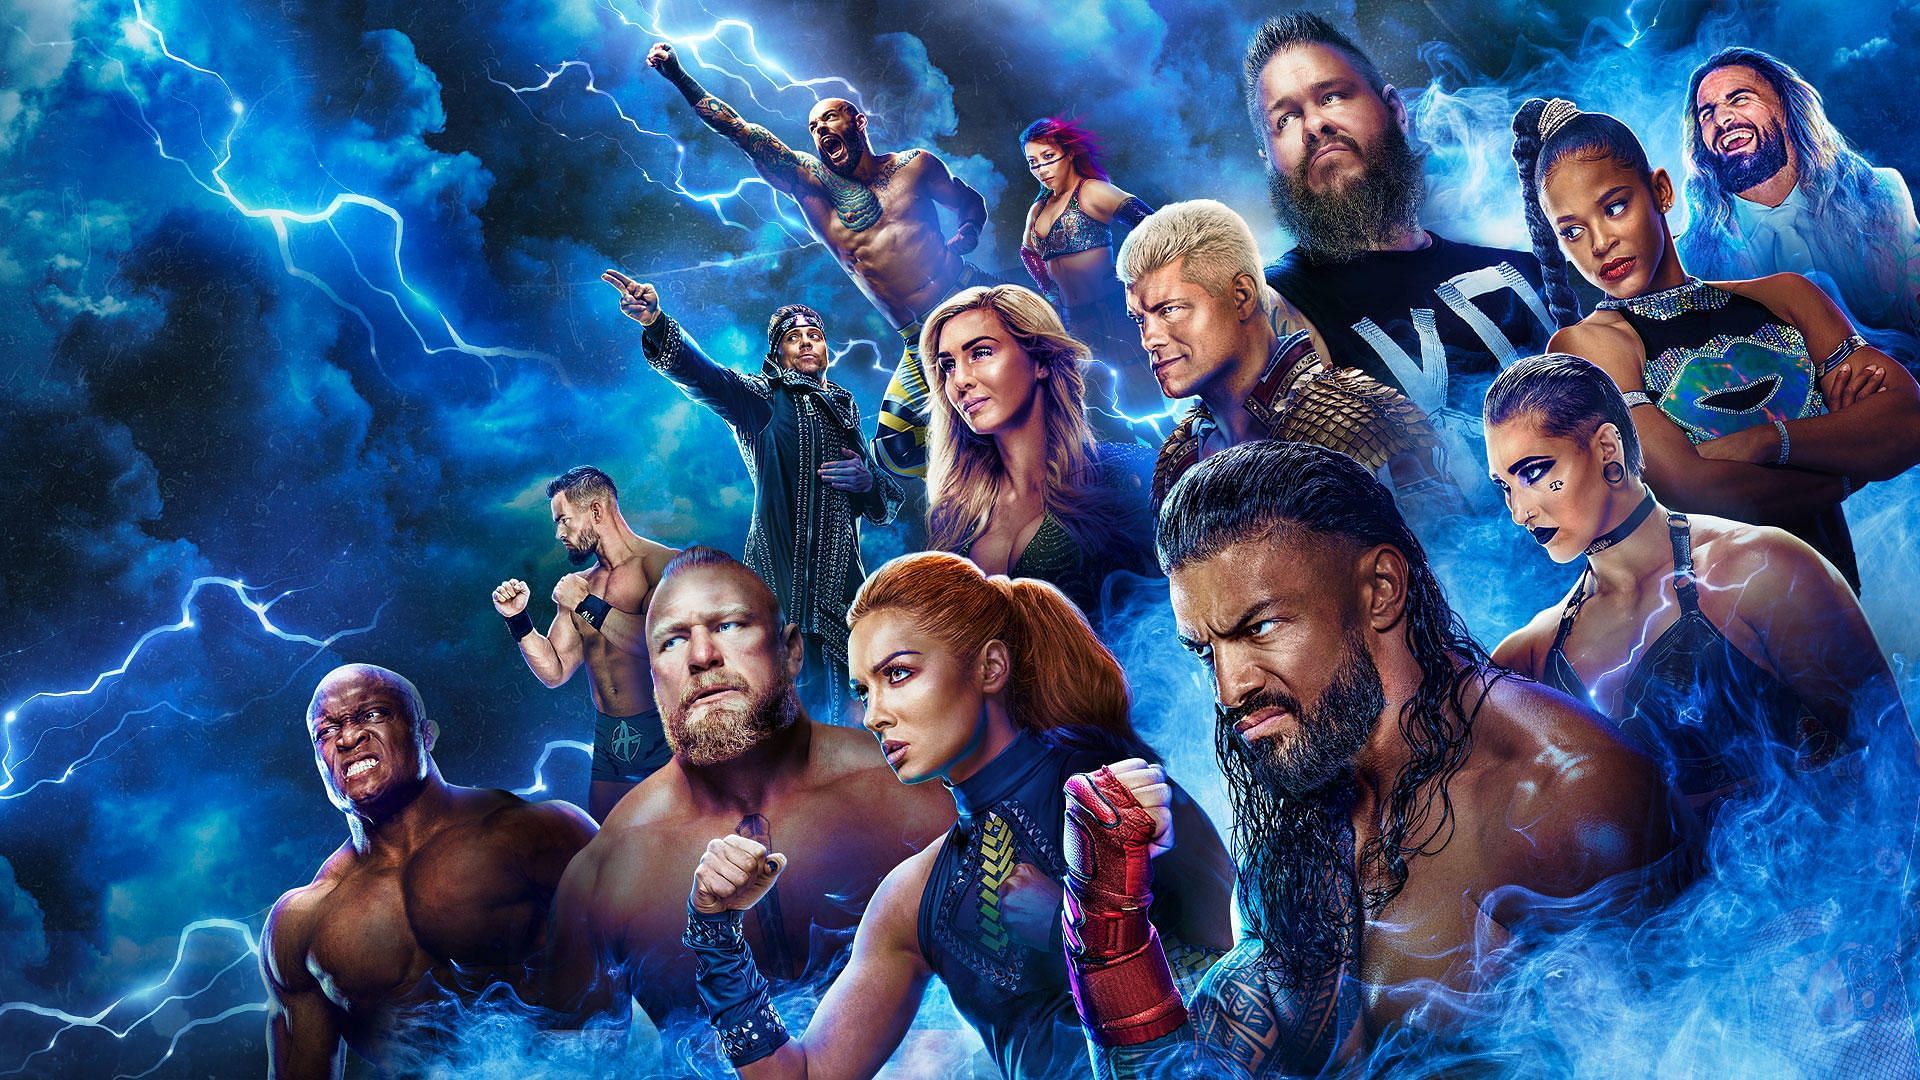 WWE Royal Rumble 2023 is upon us!